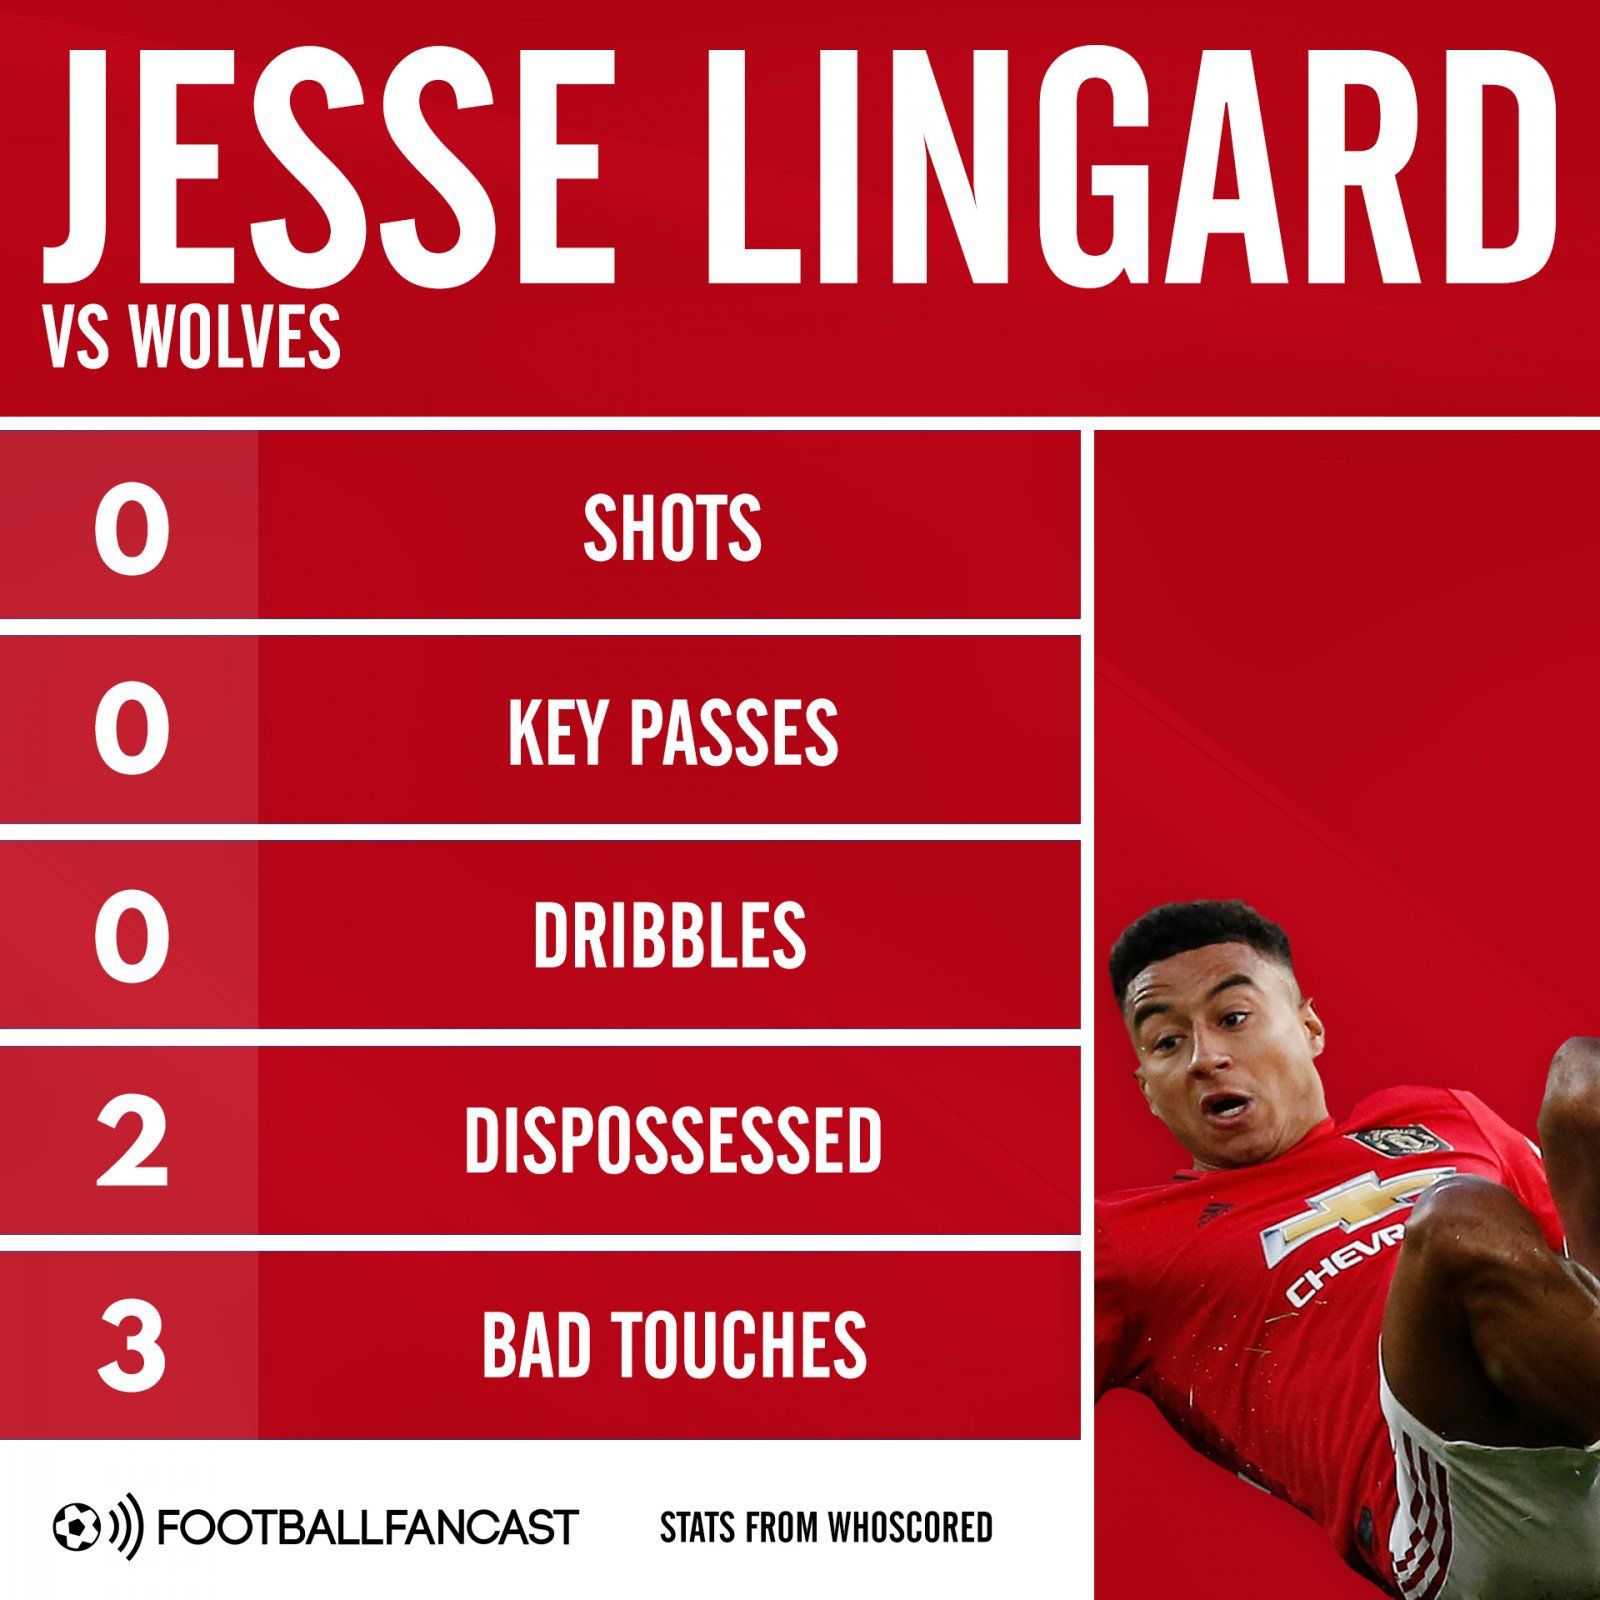 Jesse Lingard vs Wolves